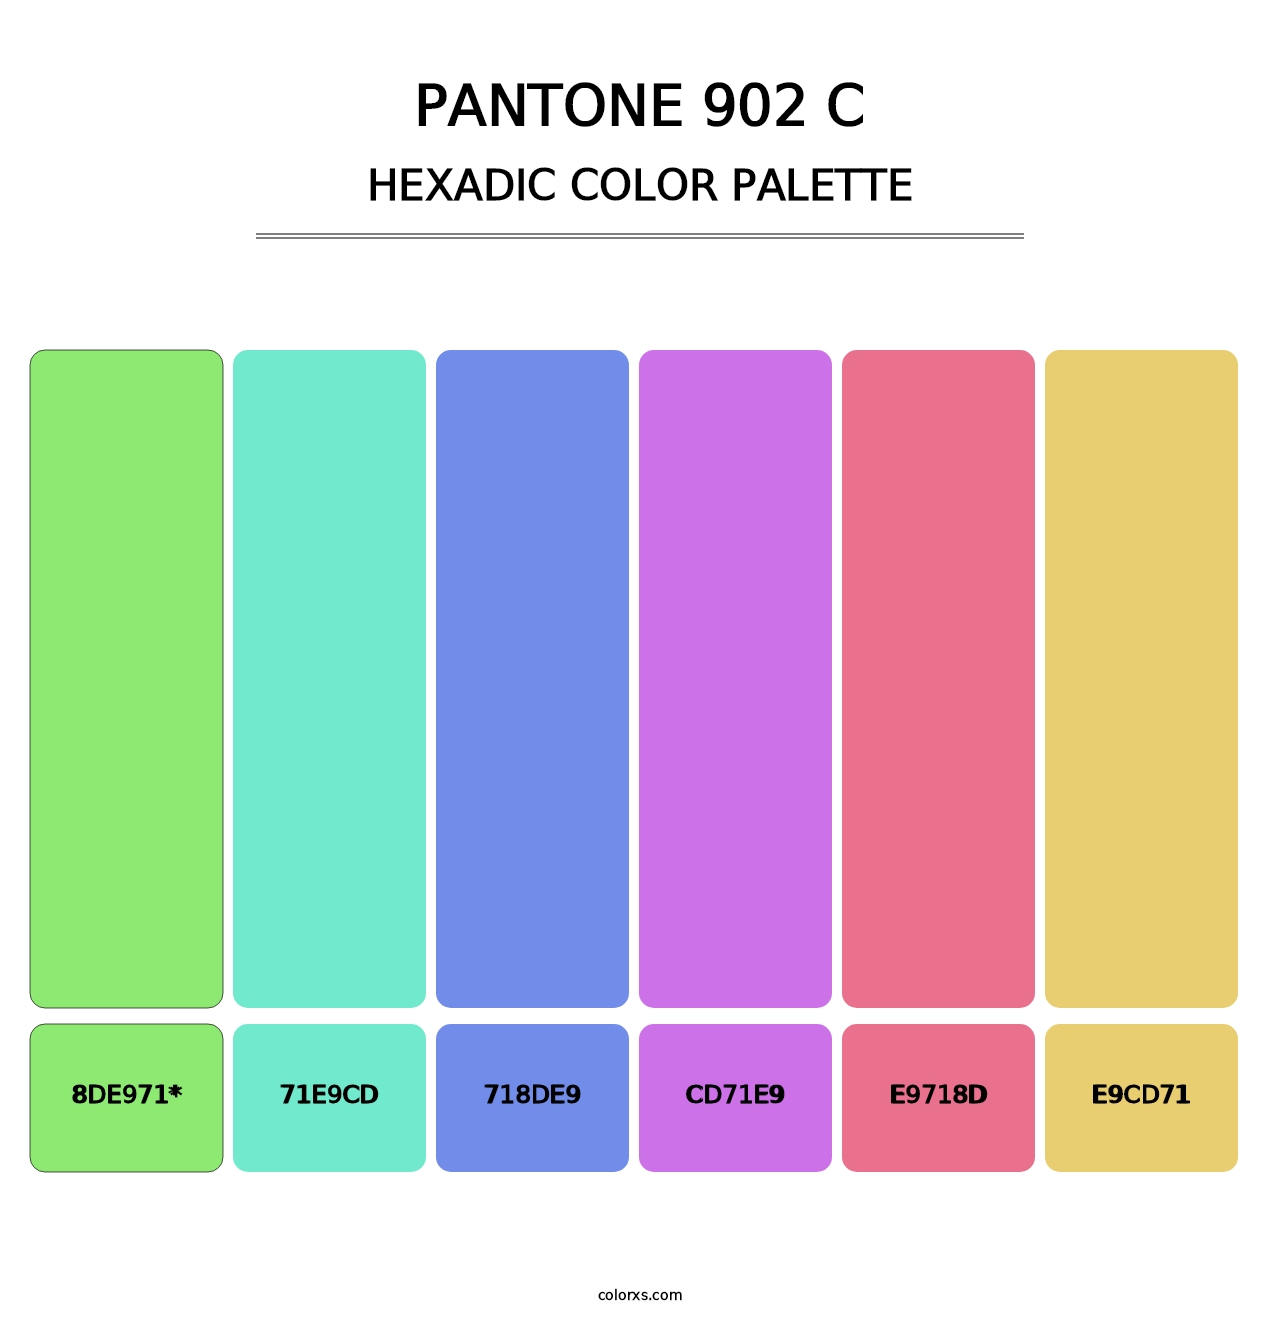 PANTONE 902 C - Hexadic Color Palette